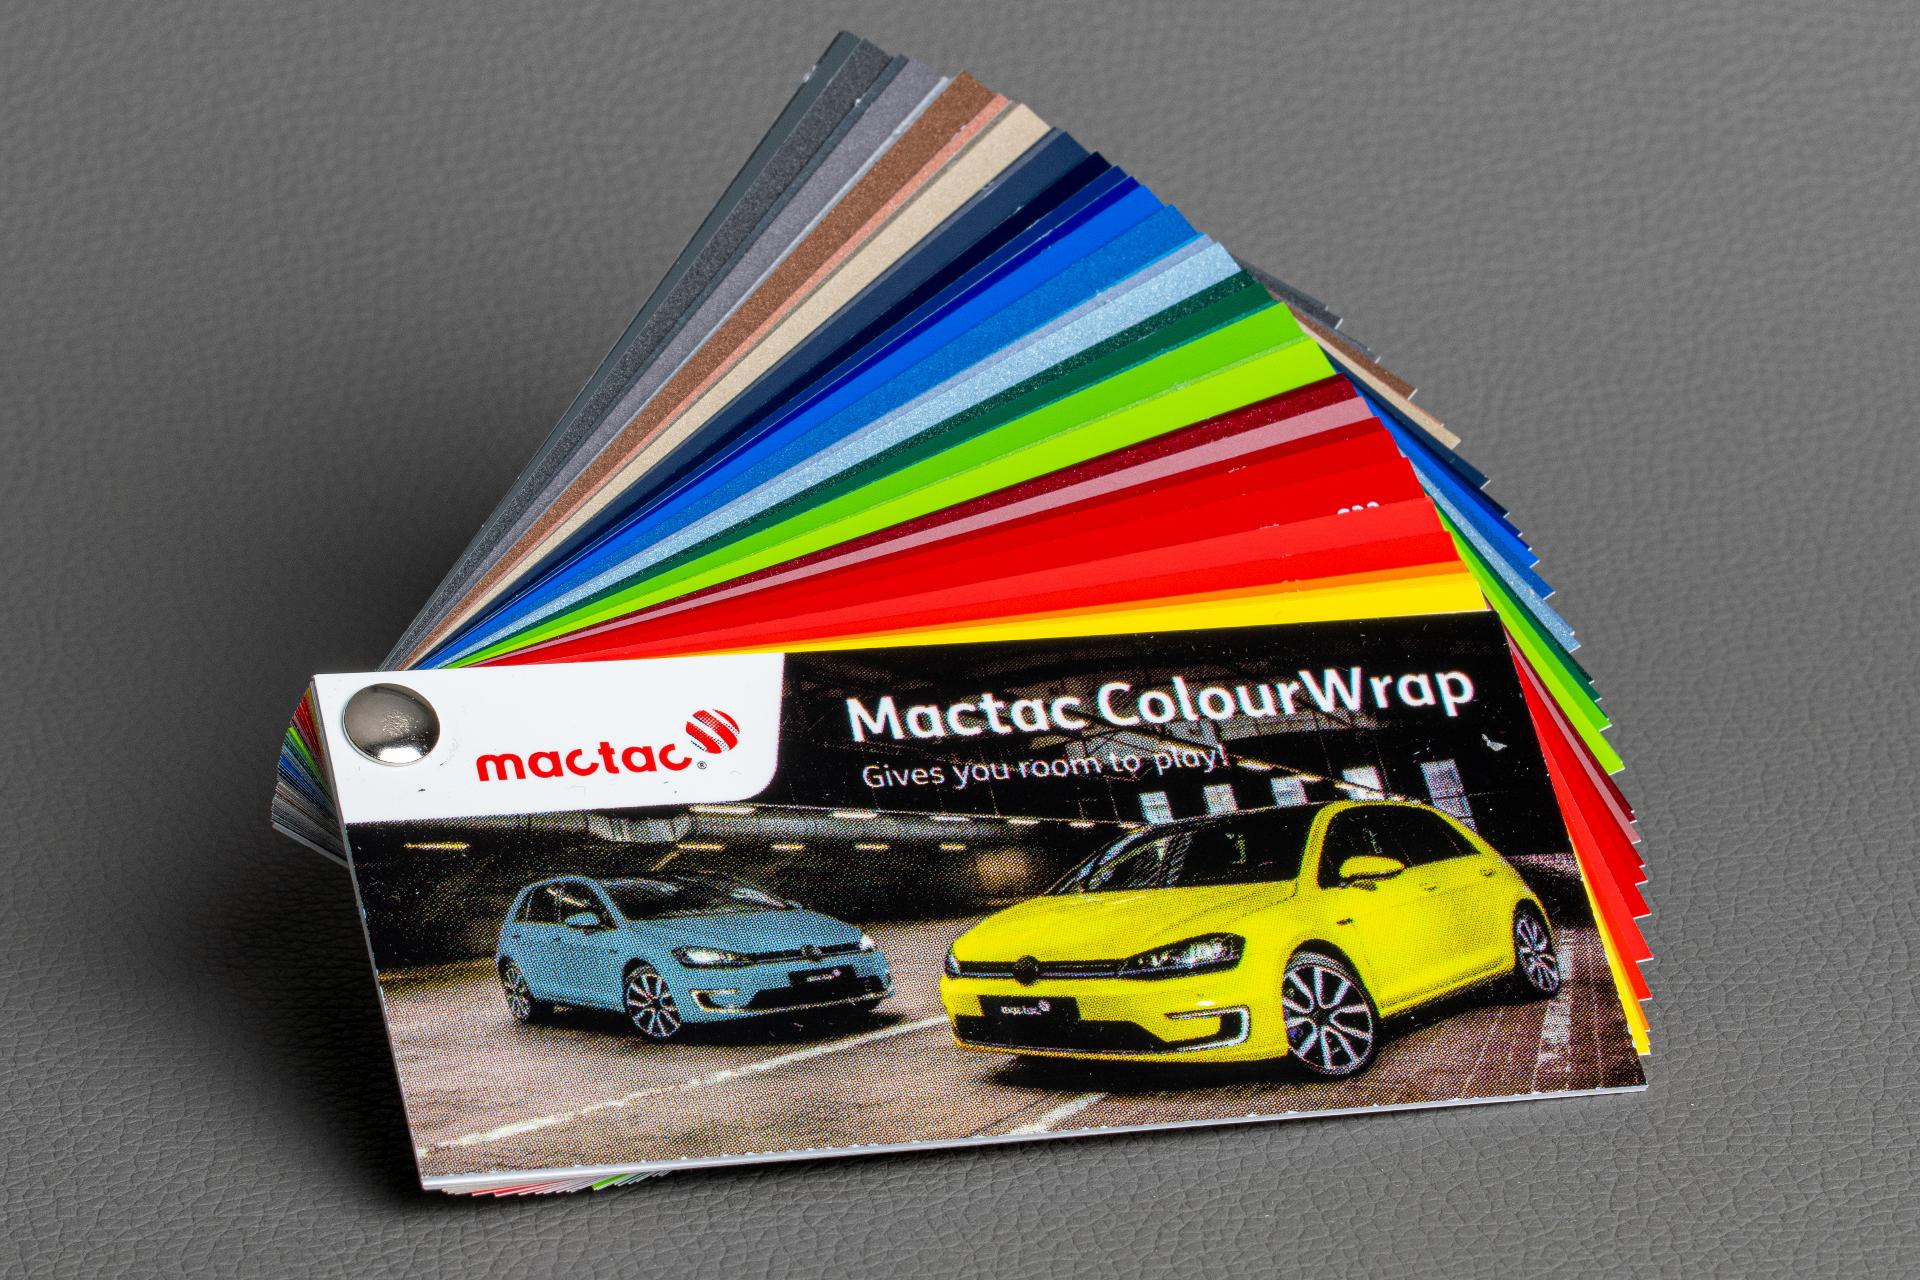 Foto: Farbfächer Mactac ColourWrap